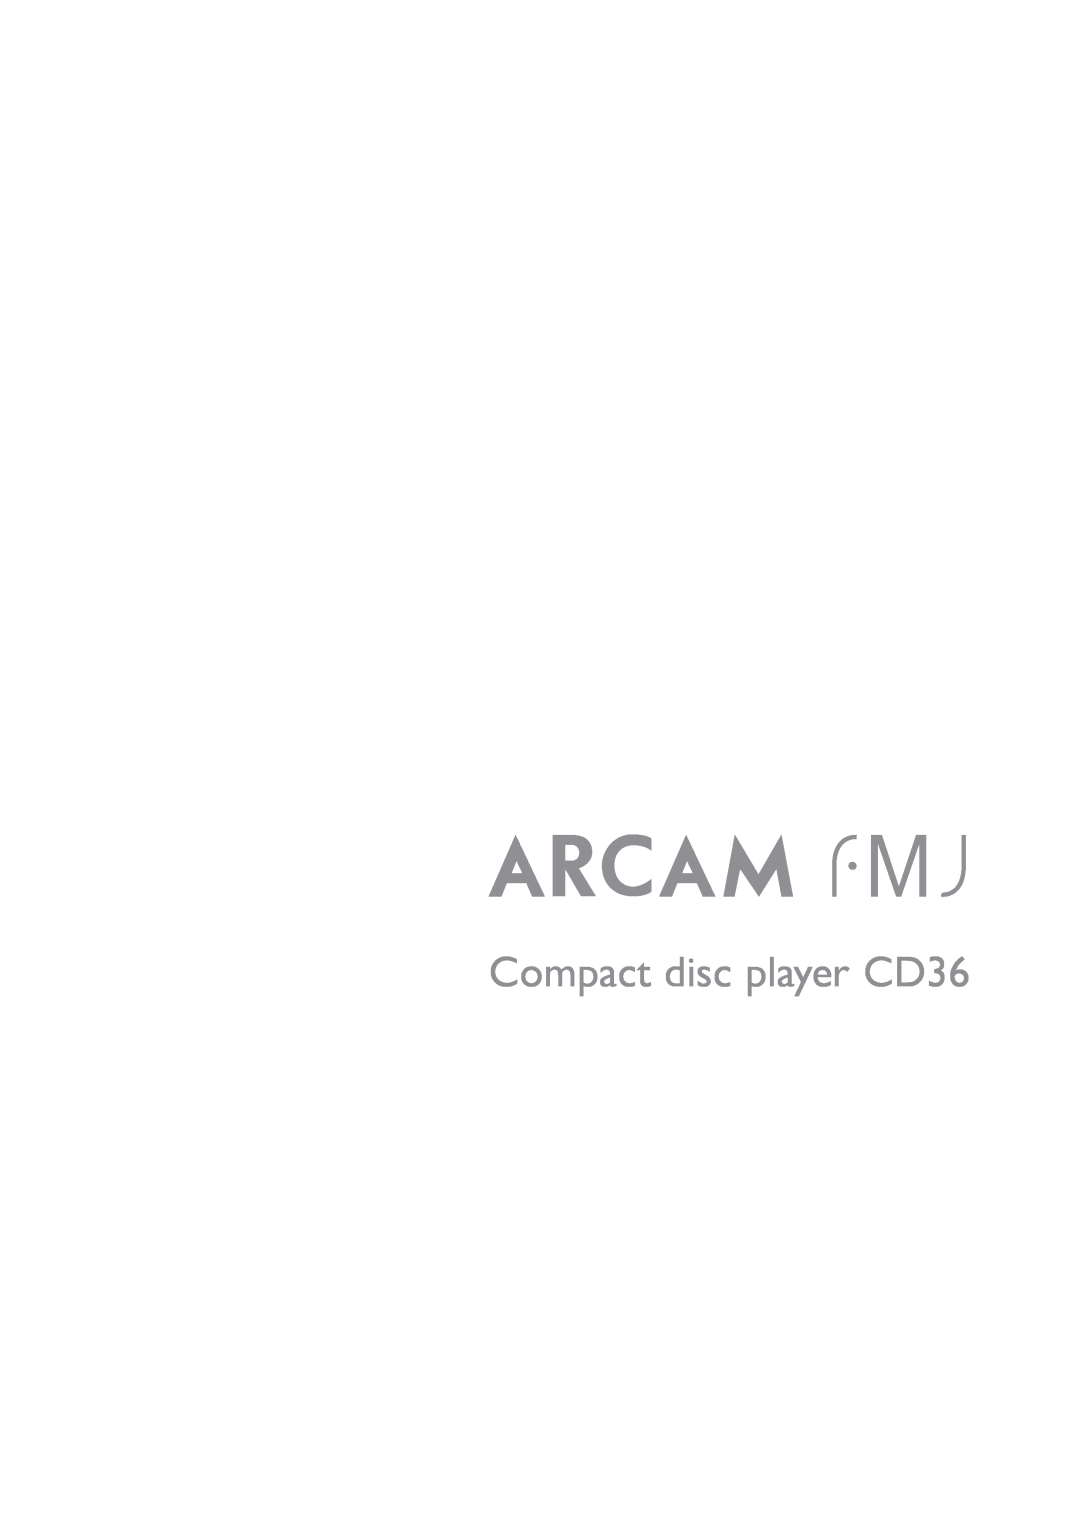 Arcam manual Compact disc player CD36 